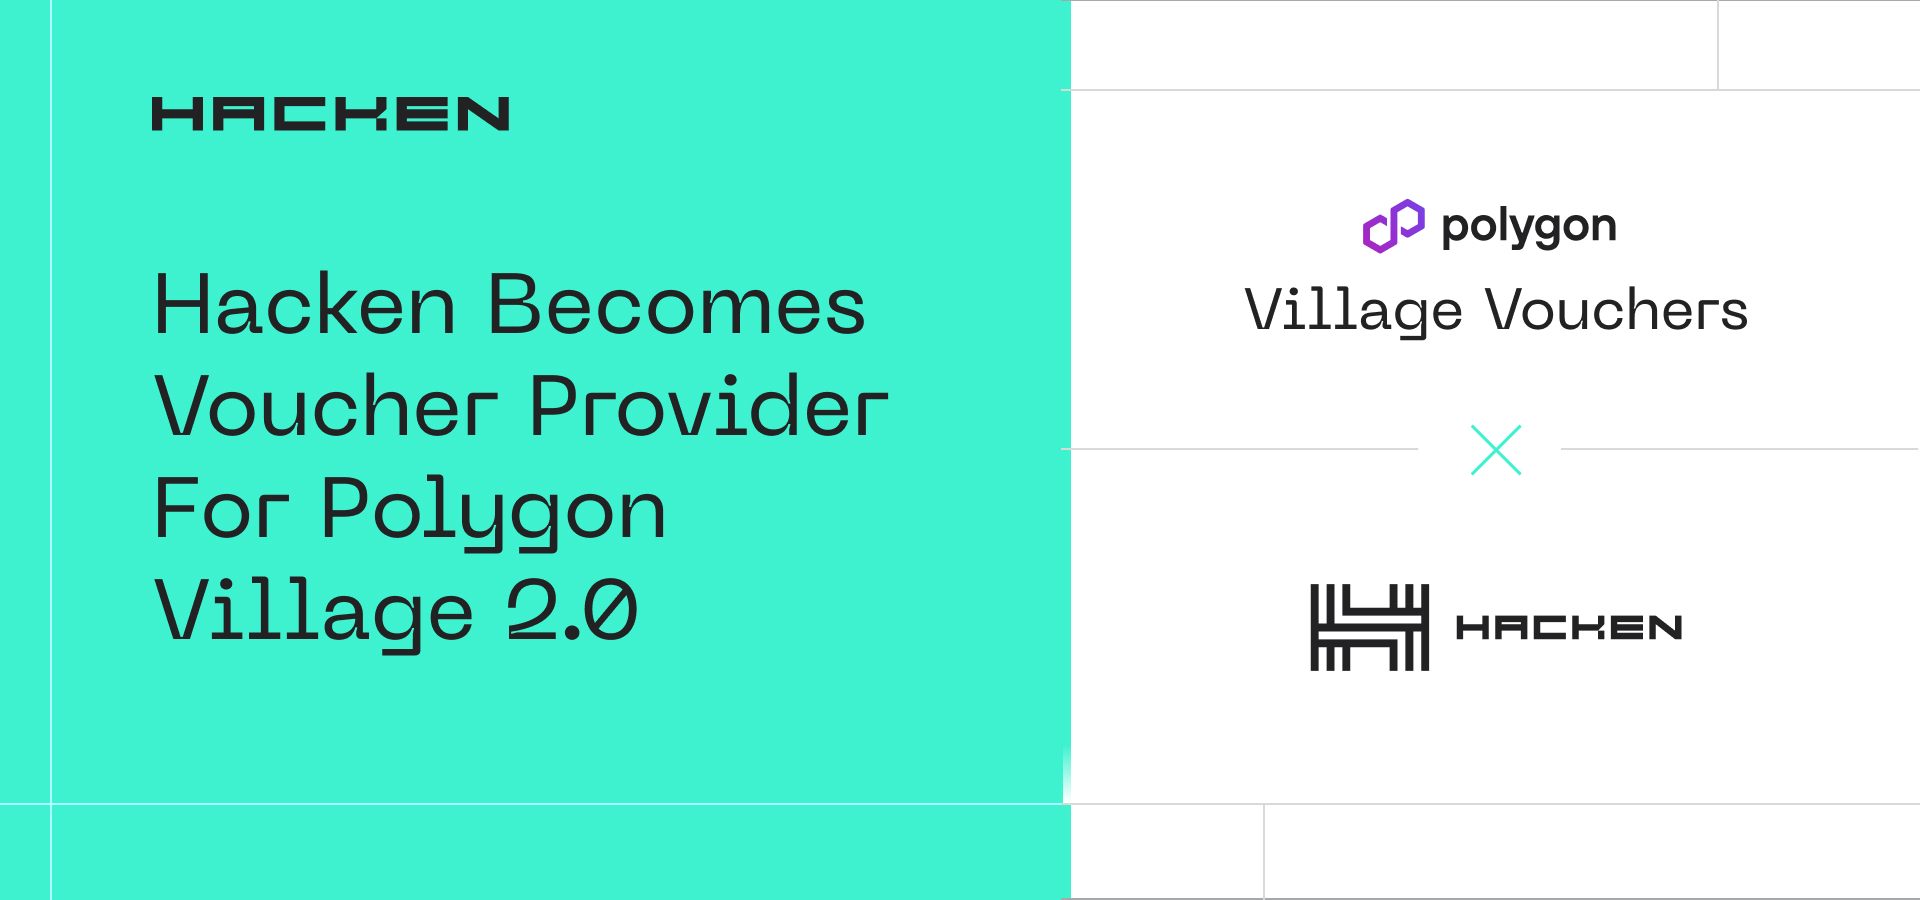 Hacken Becomes Voucher Provider For Polygon Village 2.0